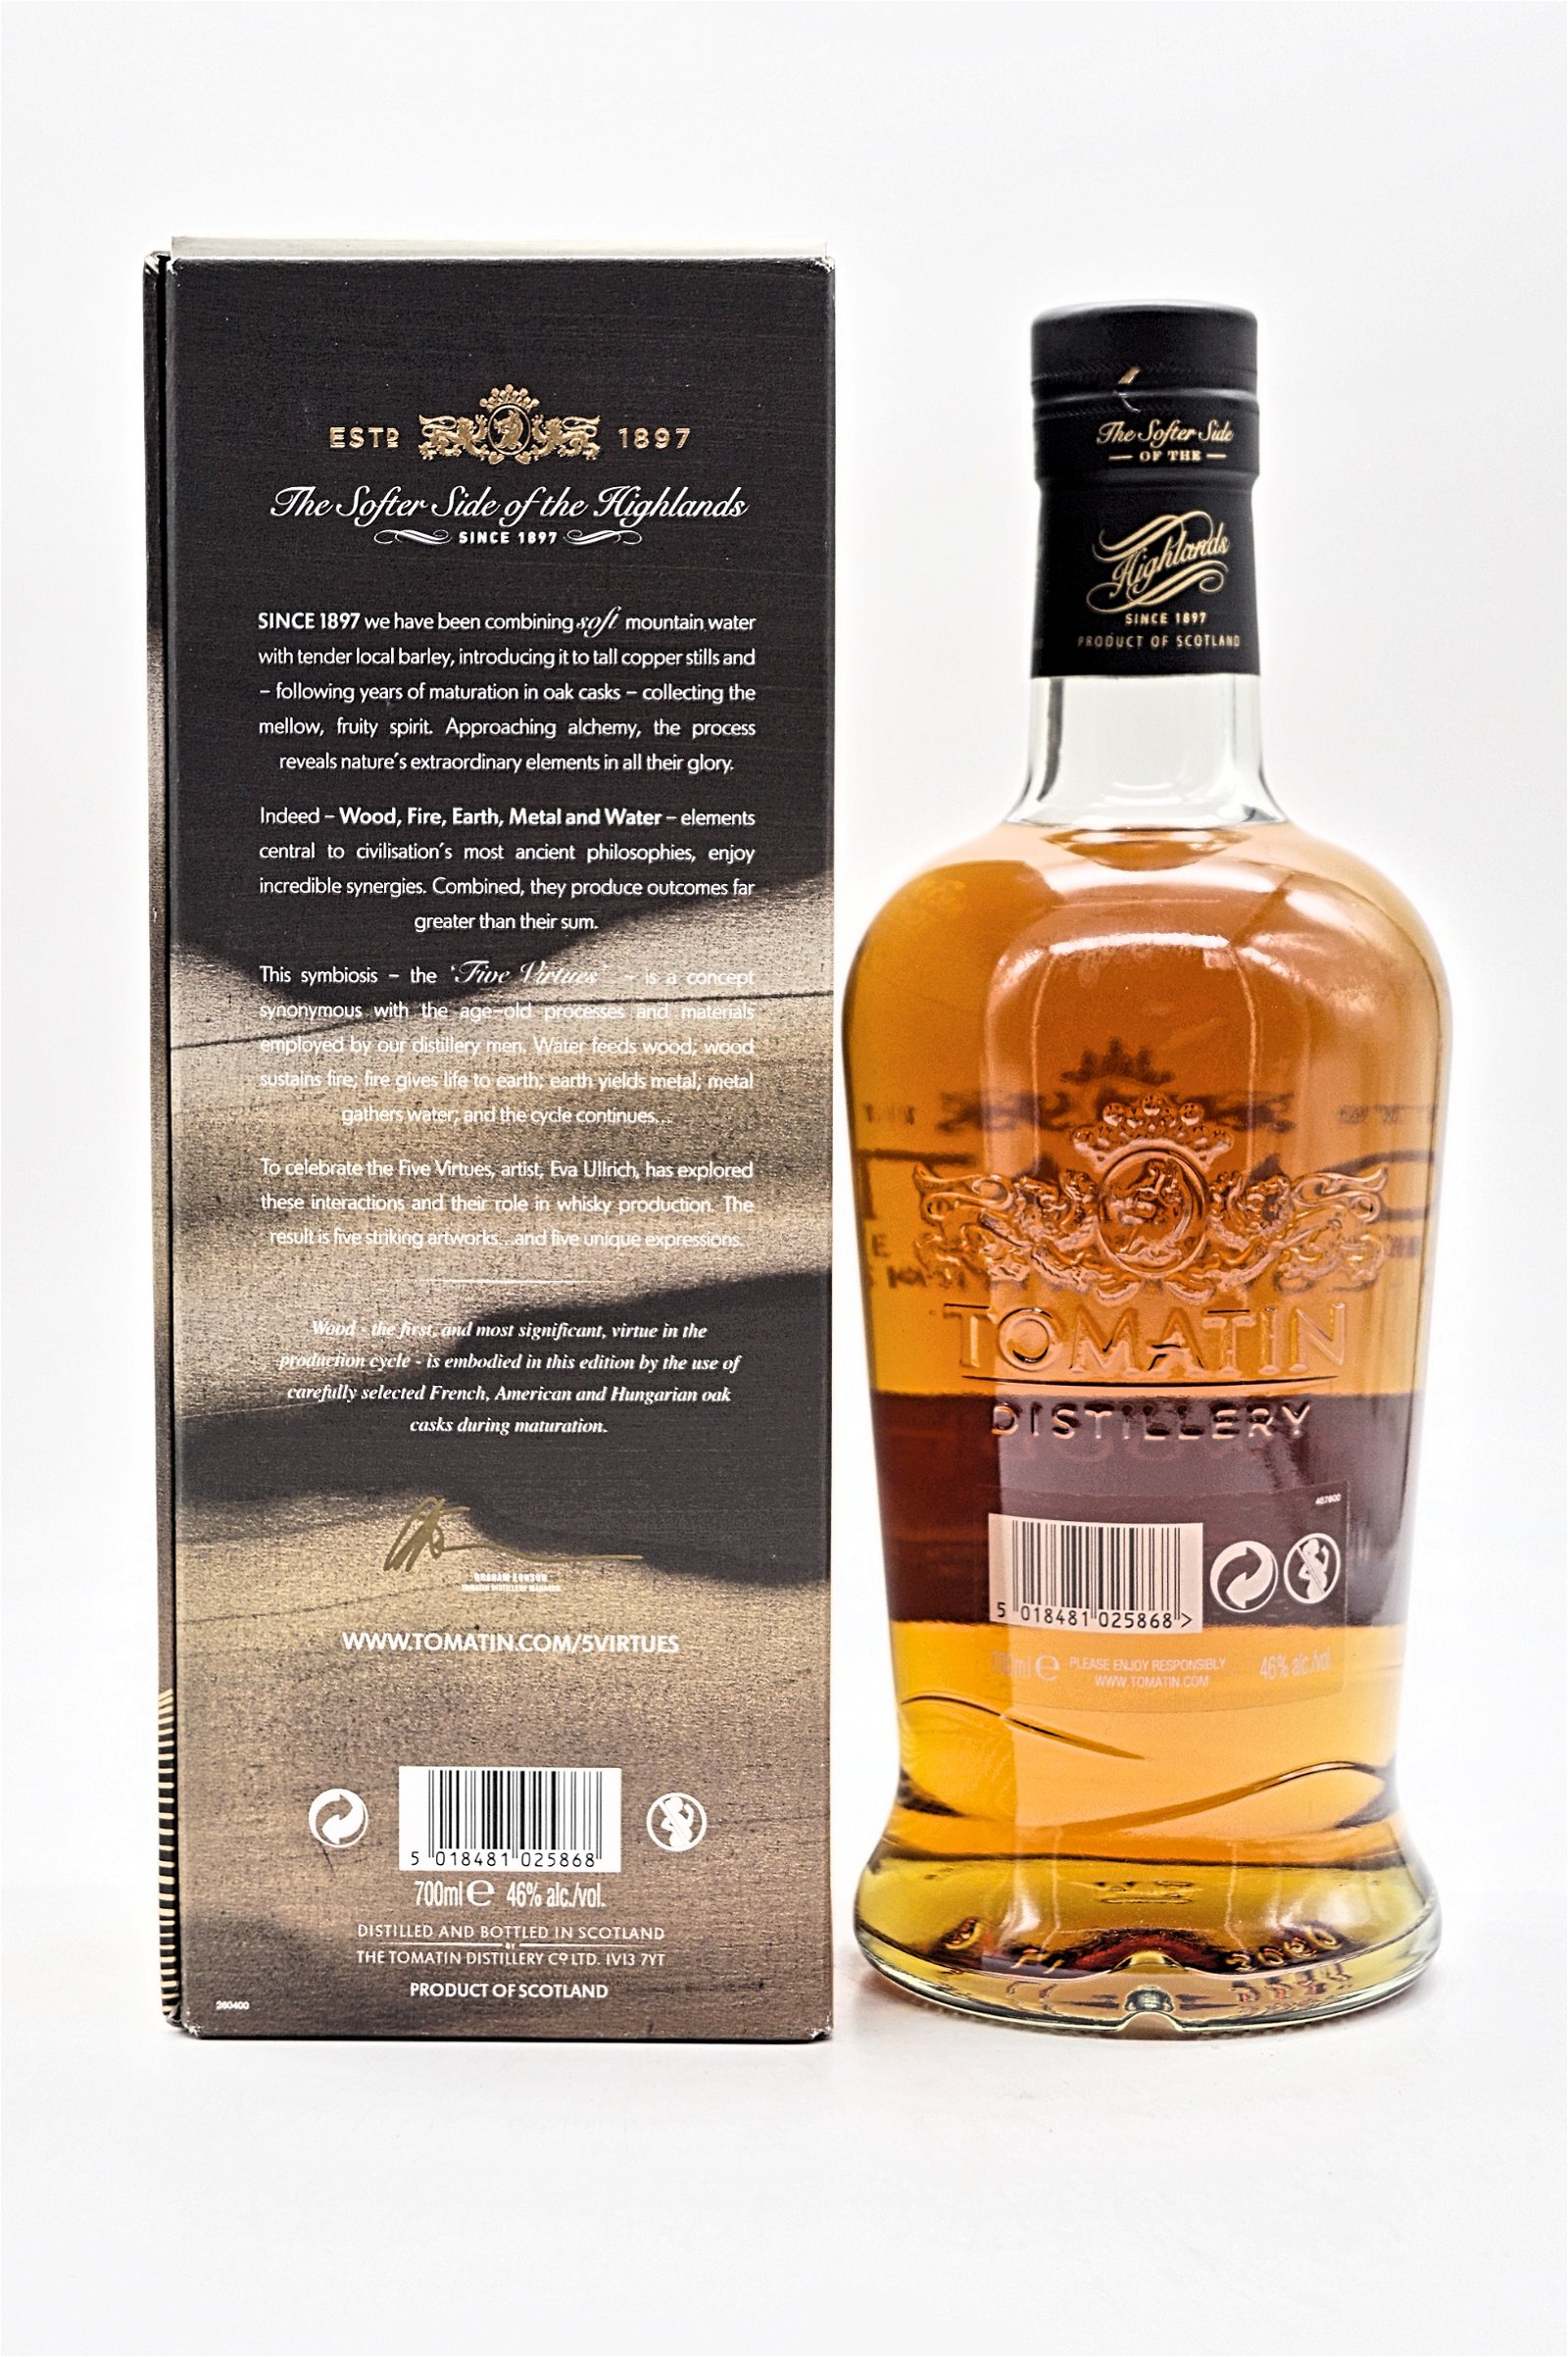 Tomatin Wood Limited Edition Selected Oak Casks Highland Single Malt Scotch Whisky